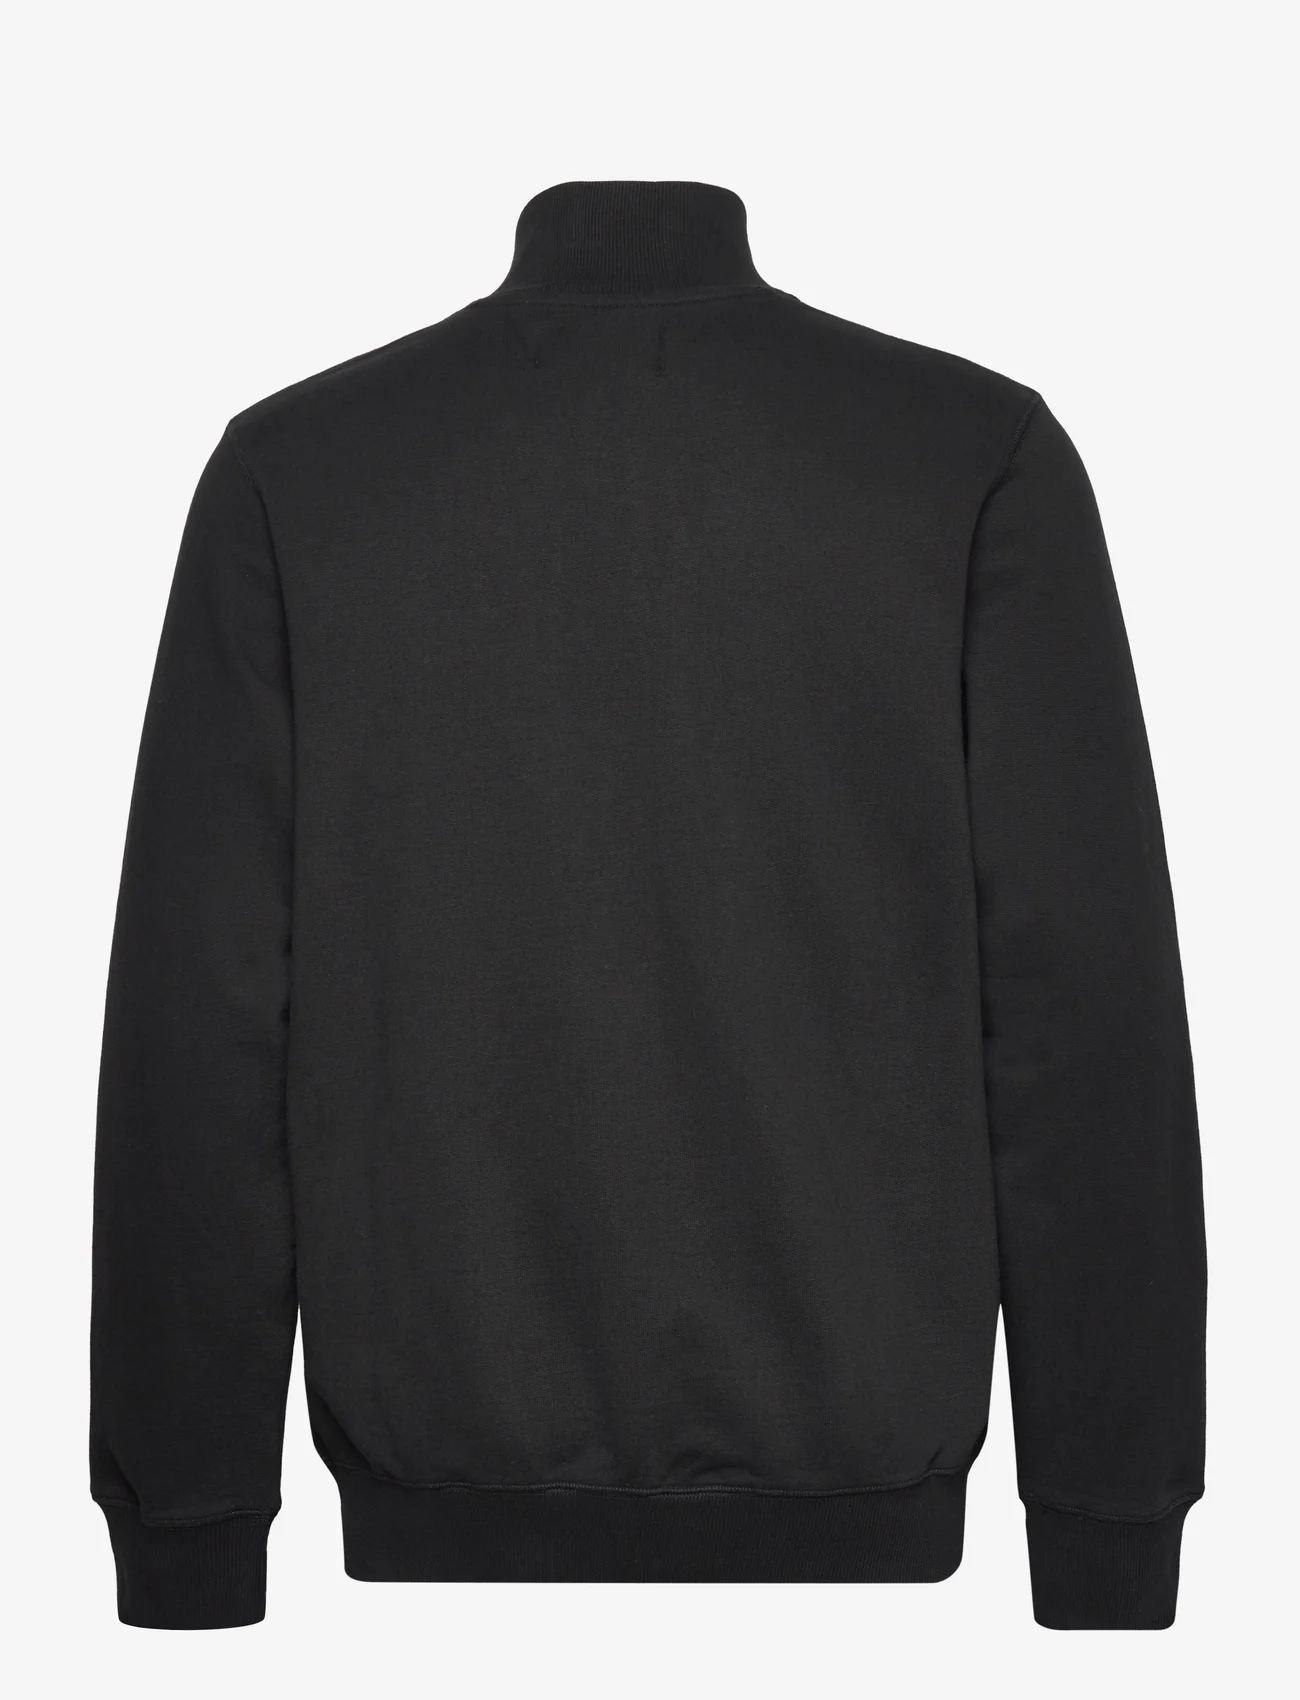 Revolution - Zip sweatshirt - svetarit - black - 1